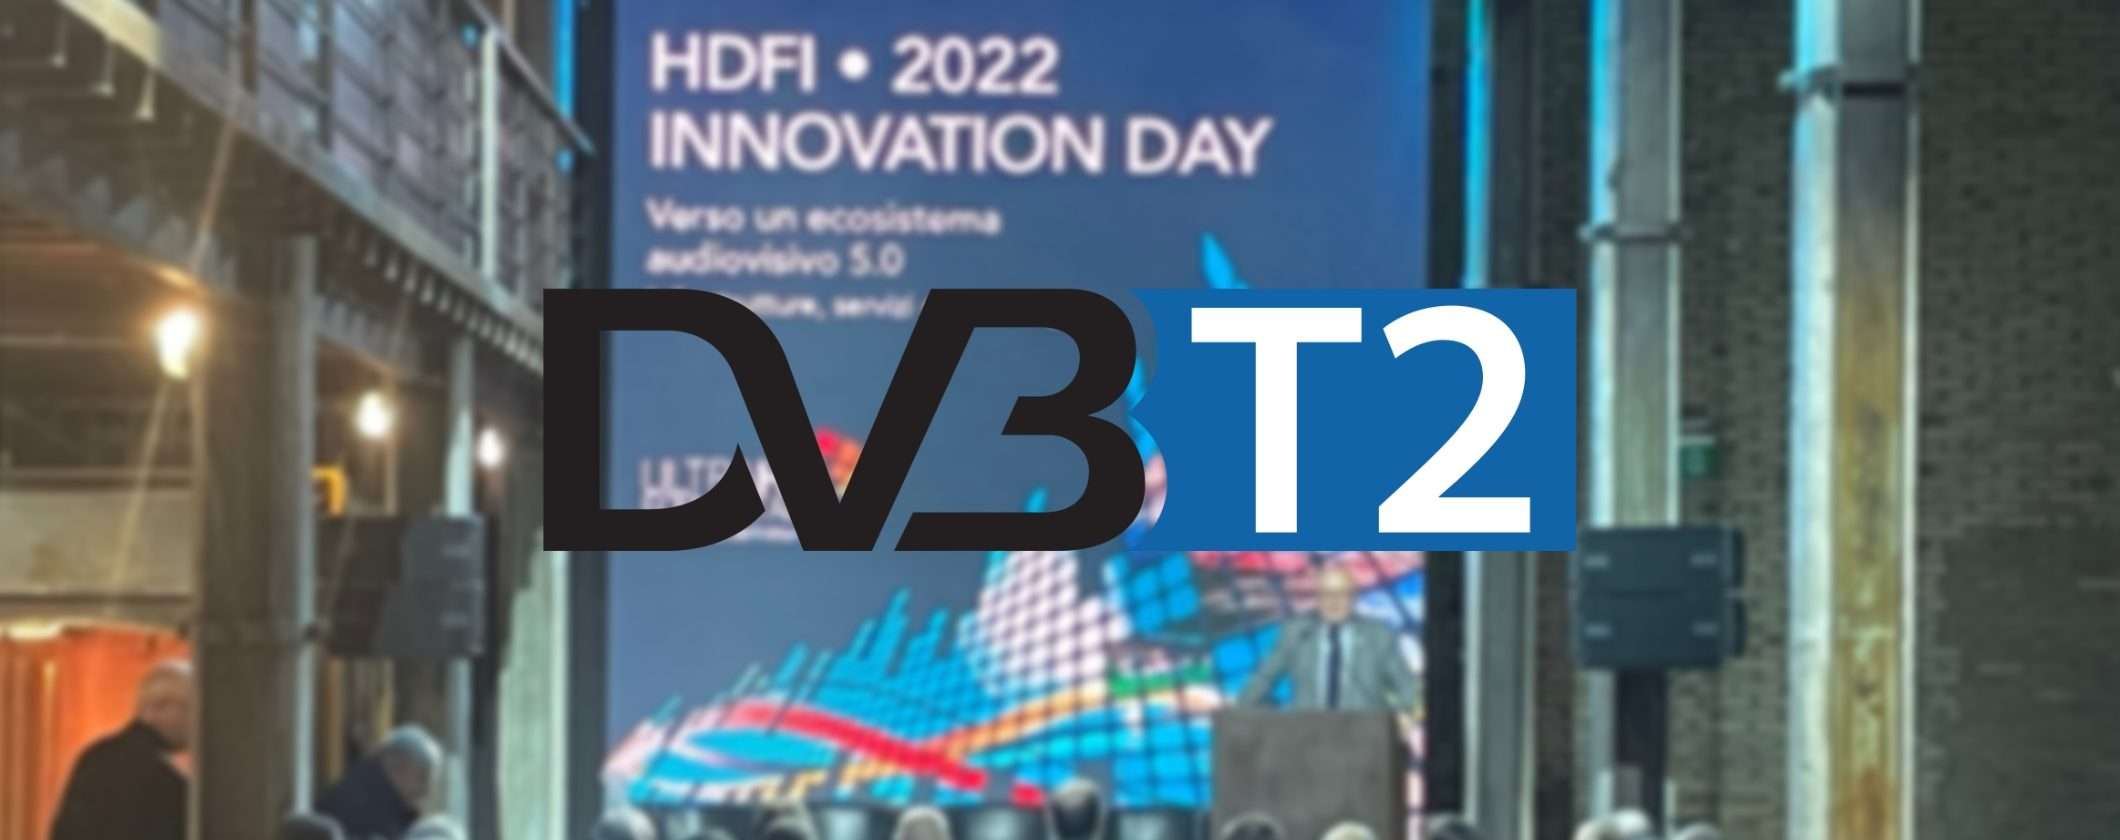 Digitale terrestre: all'Innovation Day tante novità sul DVB-T2